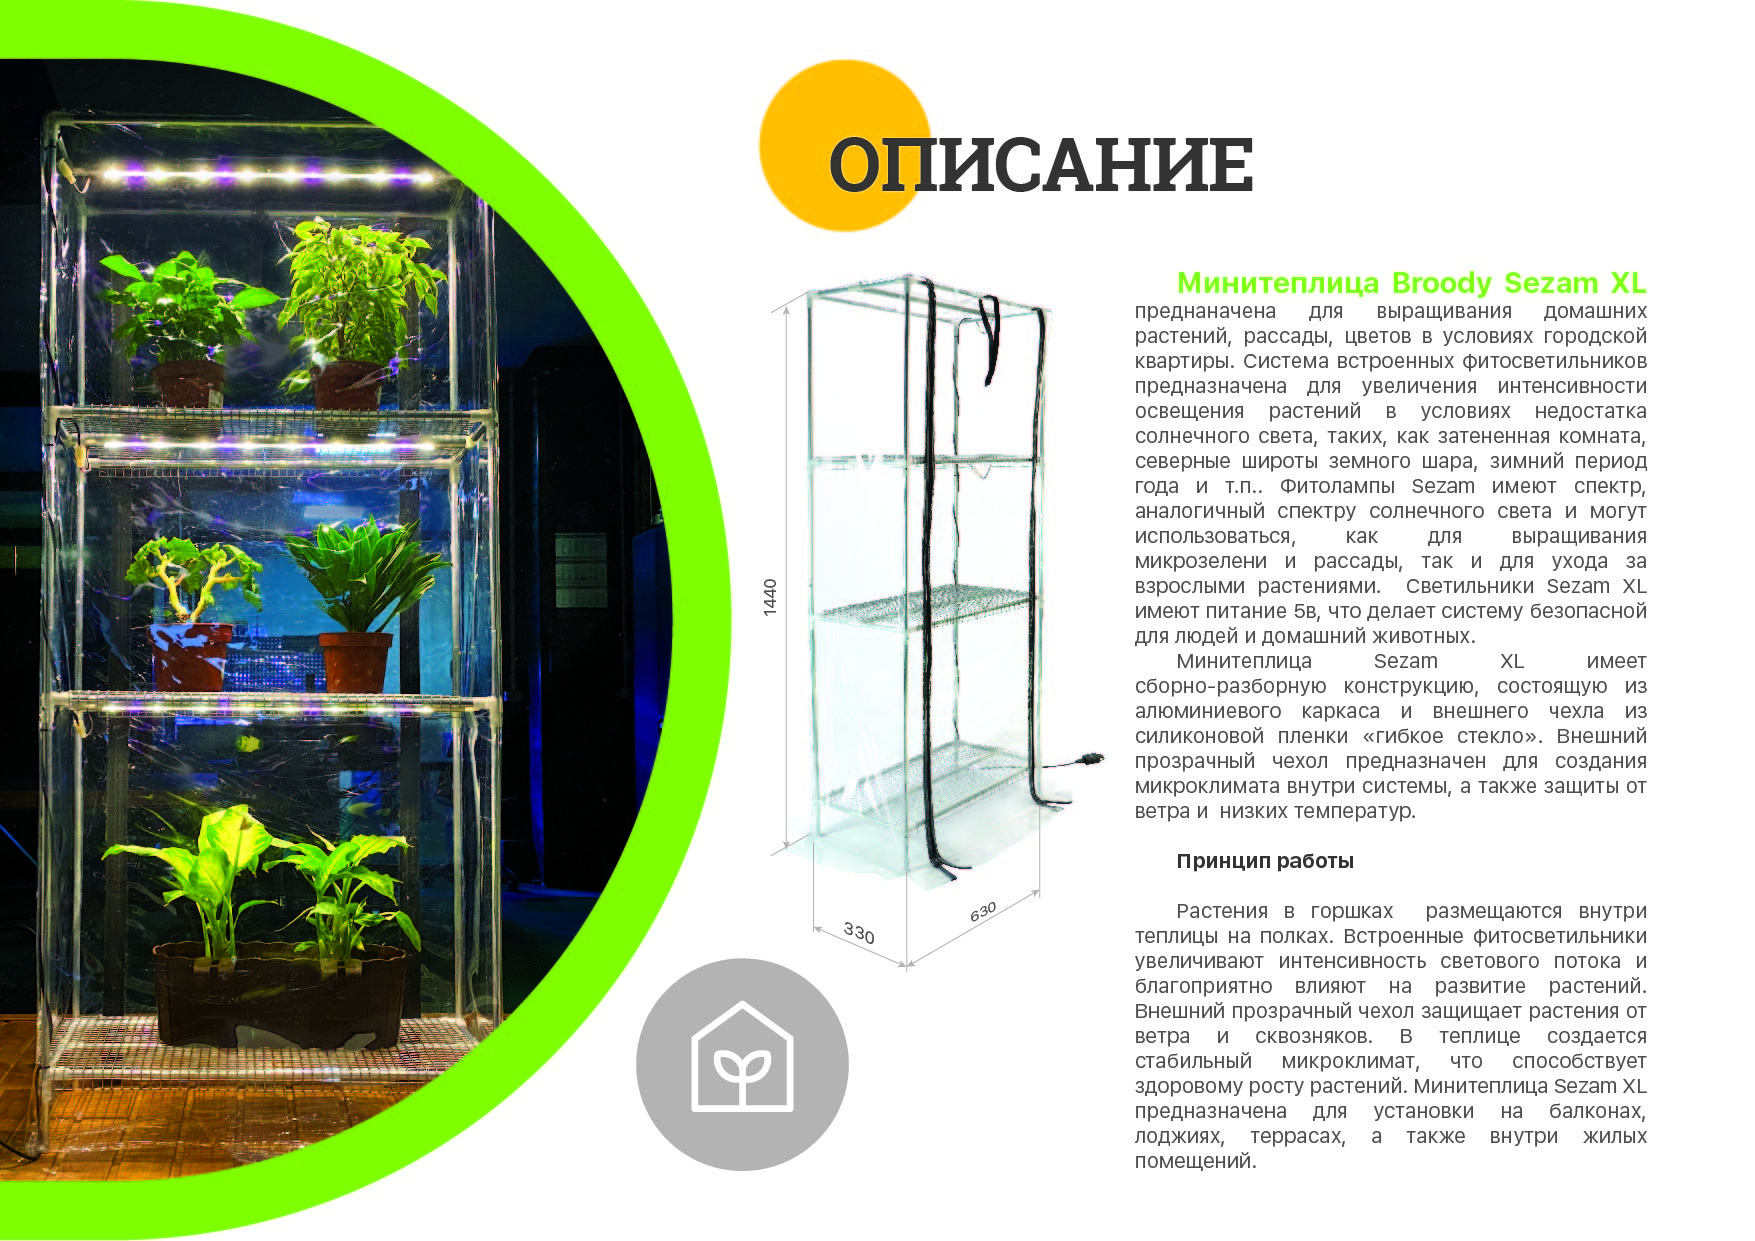 Sezam_XL - mini indoor greenhouse with light